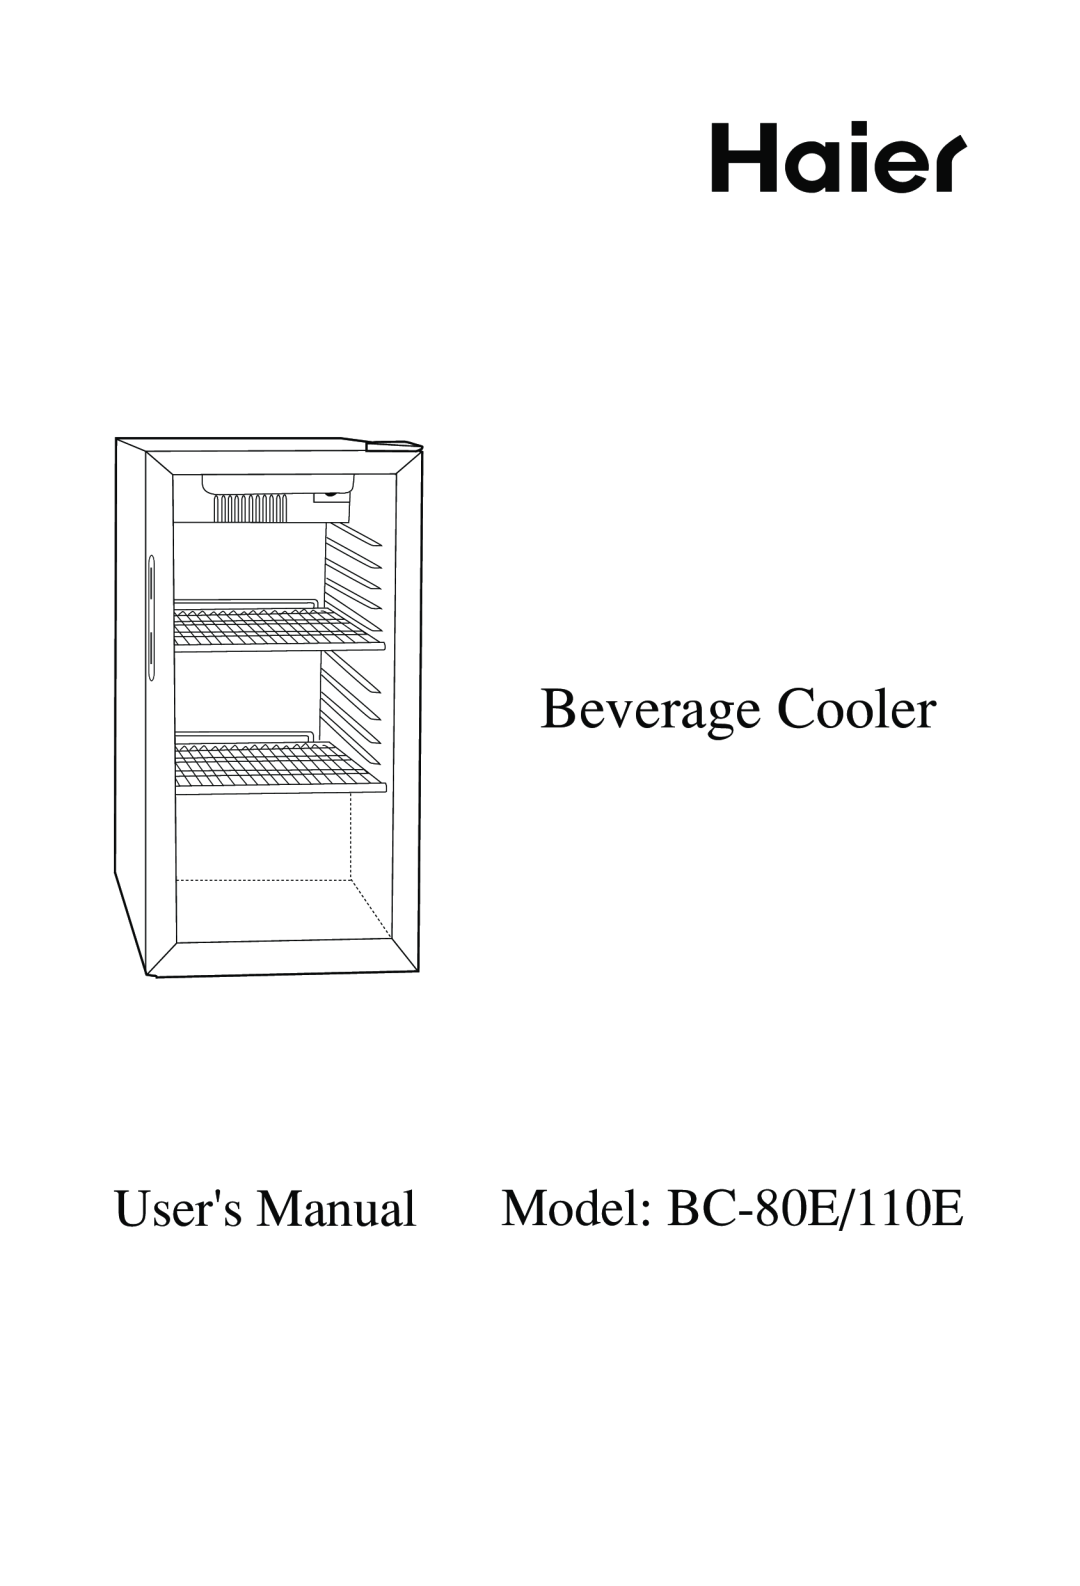 Haier BC-110E user manual Beverage Cooler, Model BC-80E/110E 